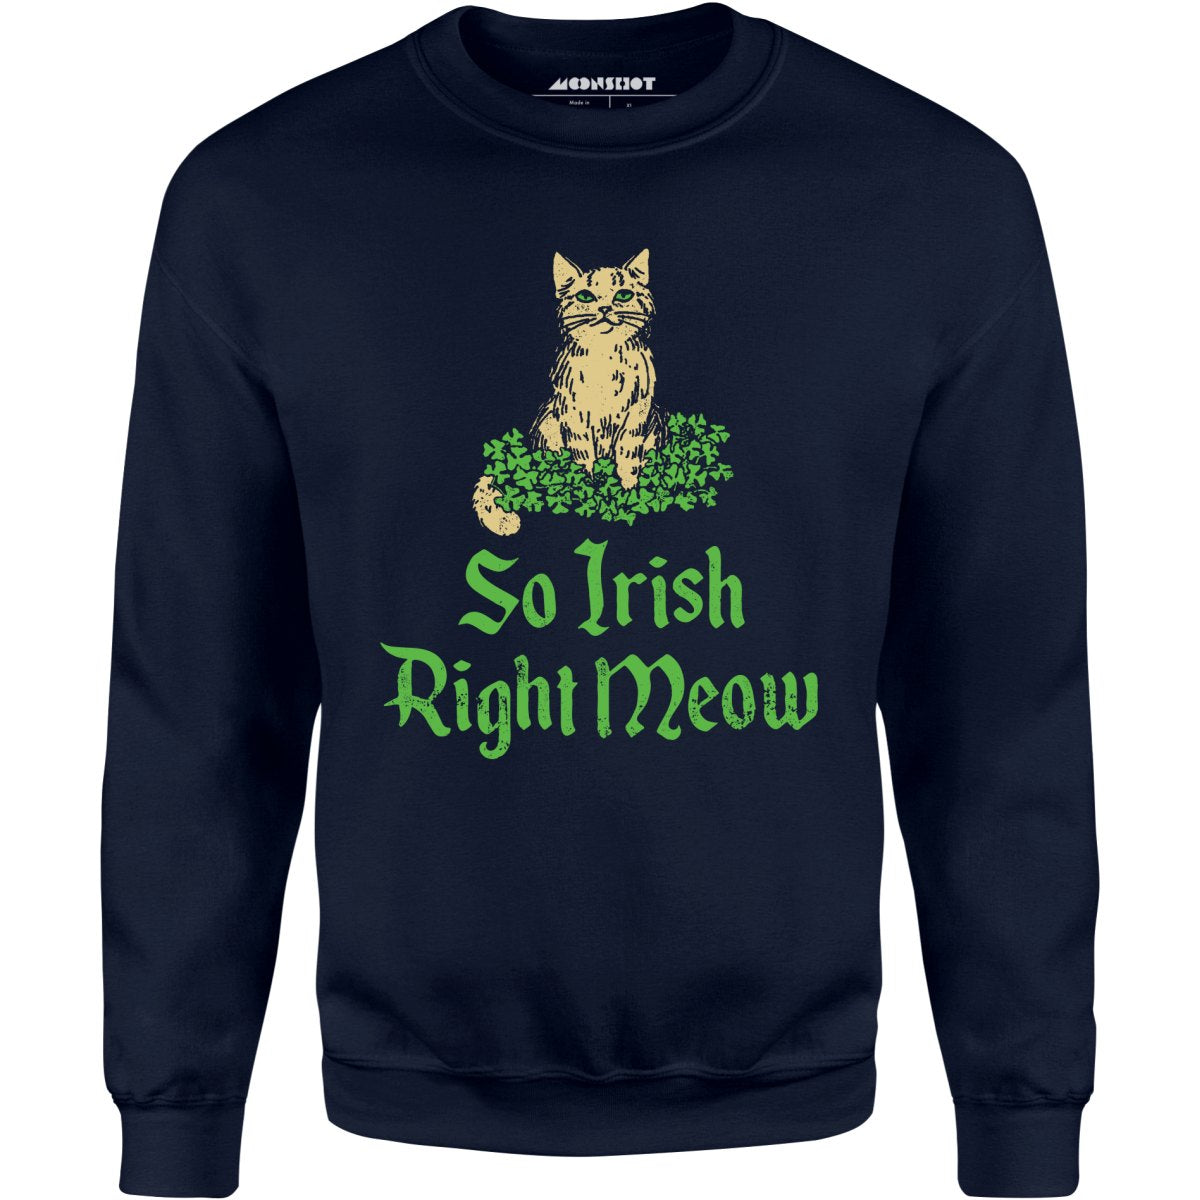 So Irish Right Meow - Unisex Sweatshirt